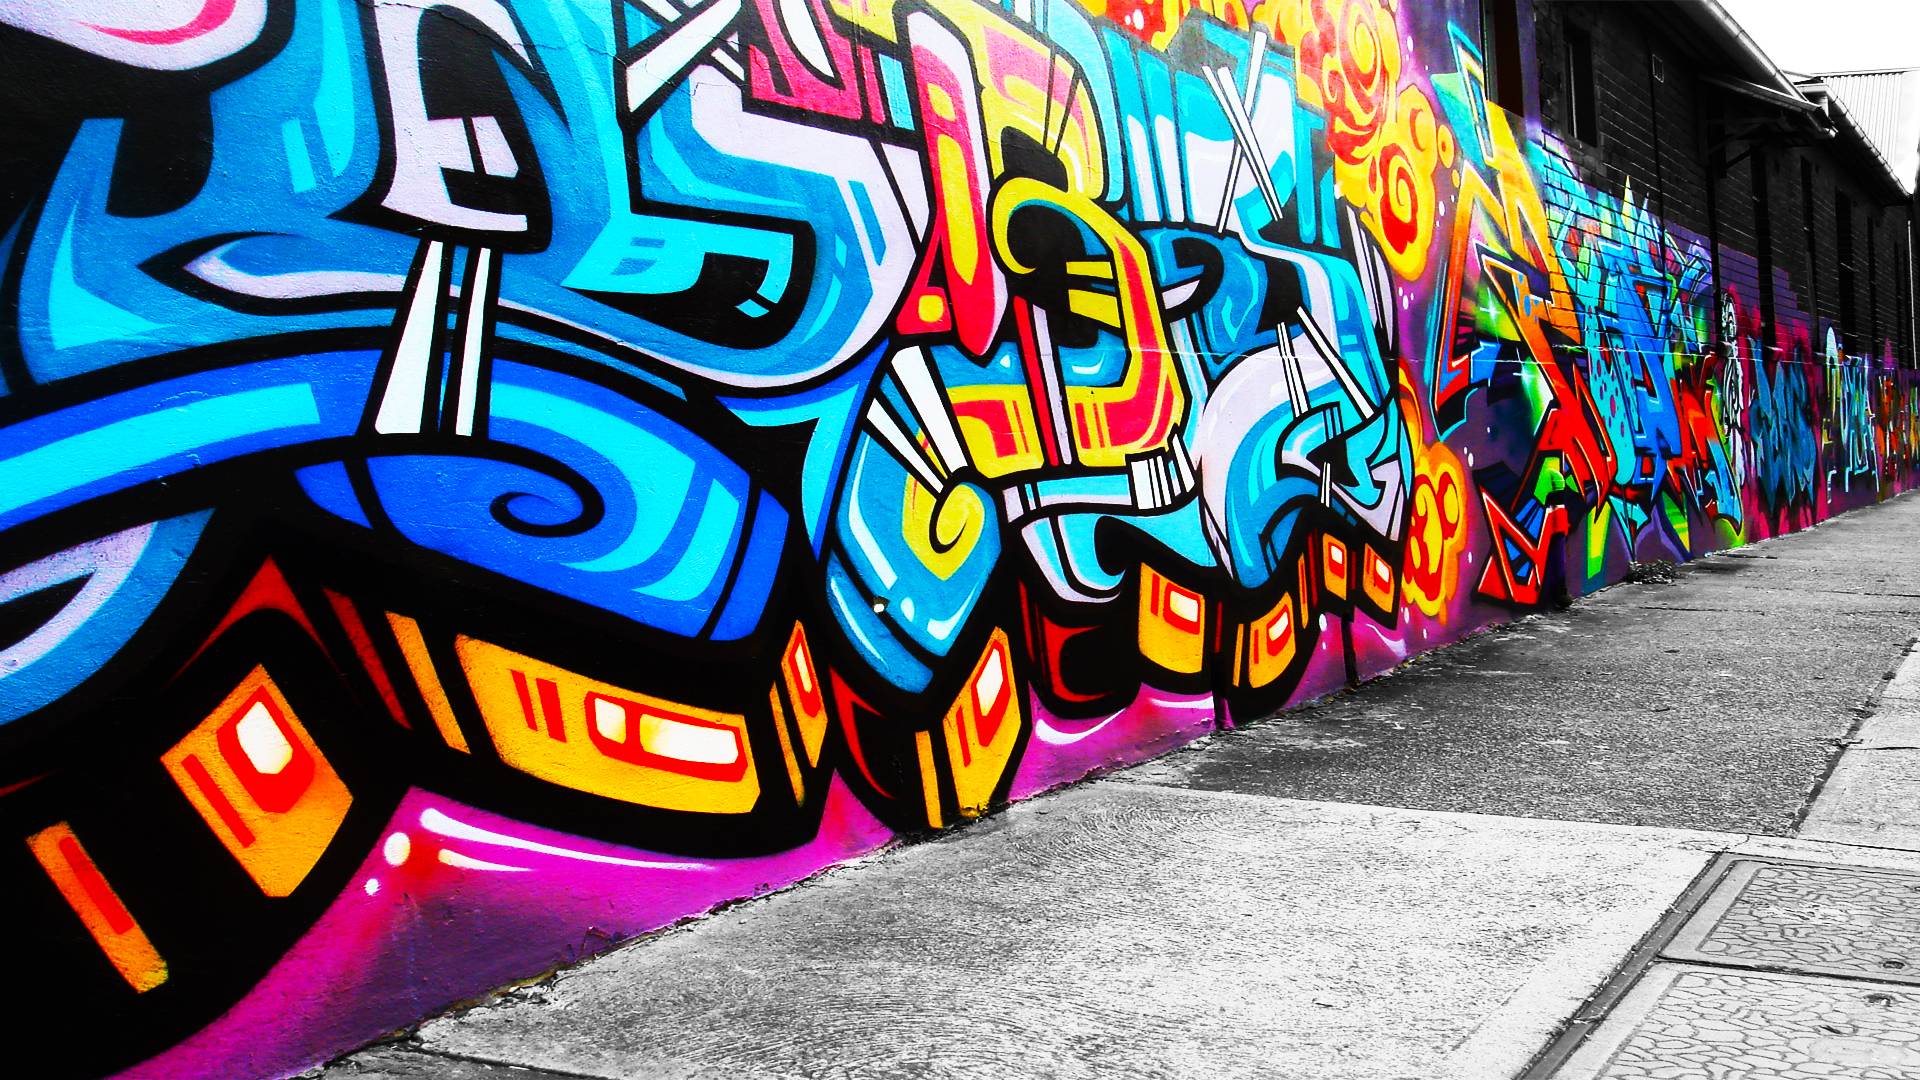 Graffiti Graffiti Street Art Wallpapers Background, Graffiti Art Pictures  Background Image And Wallpaper for Free Download